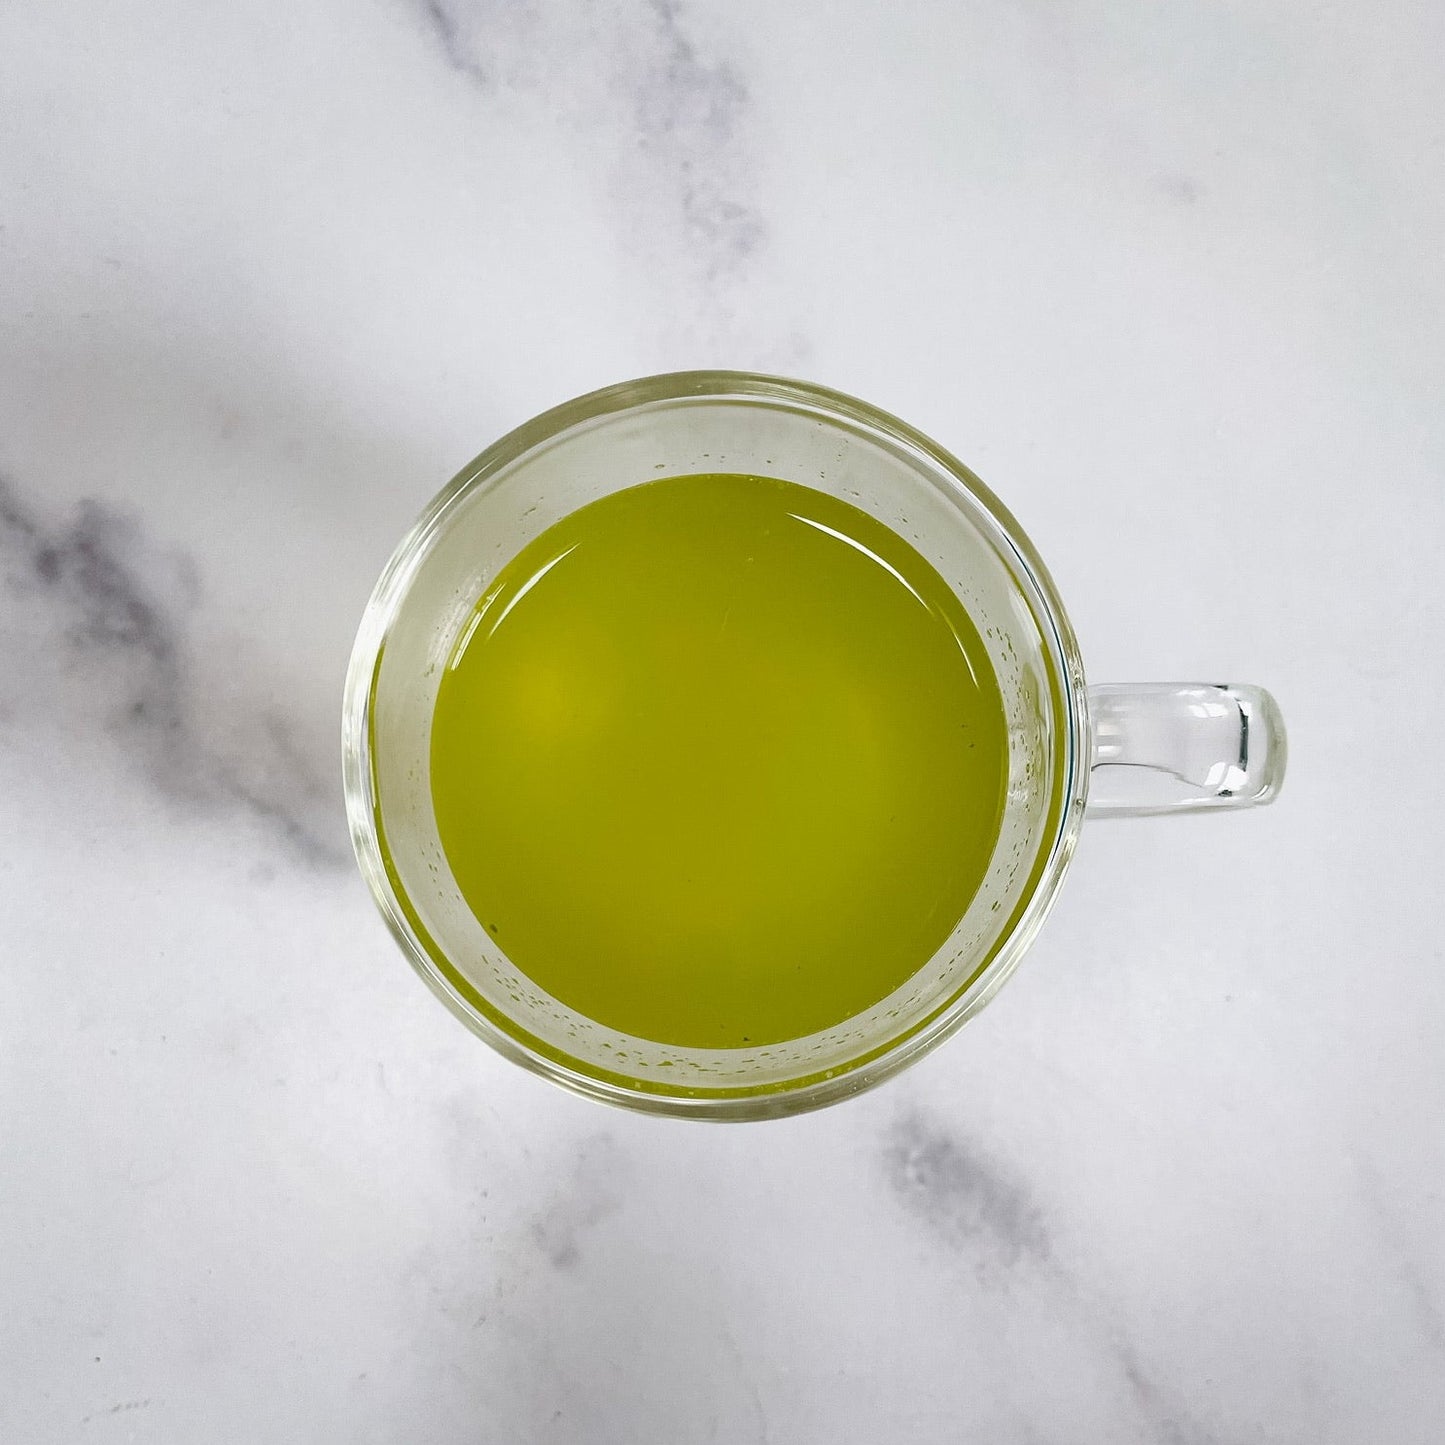 Svelte Sencha Japanese green tea - 6-oz cup, brewed